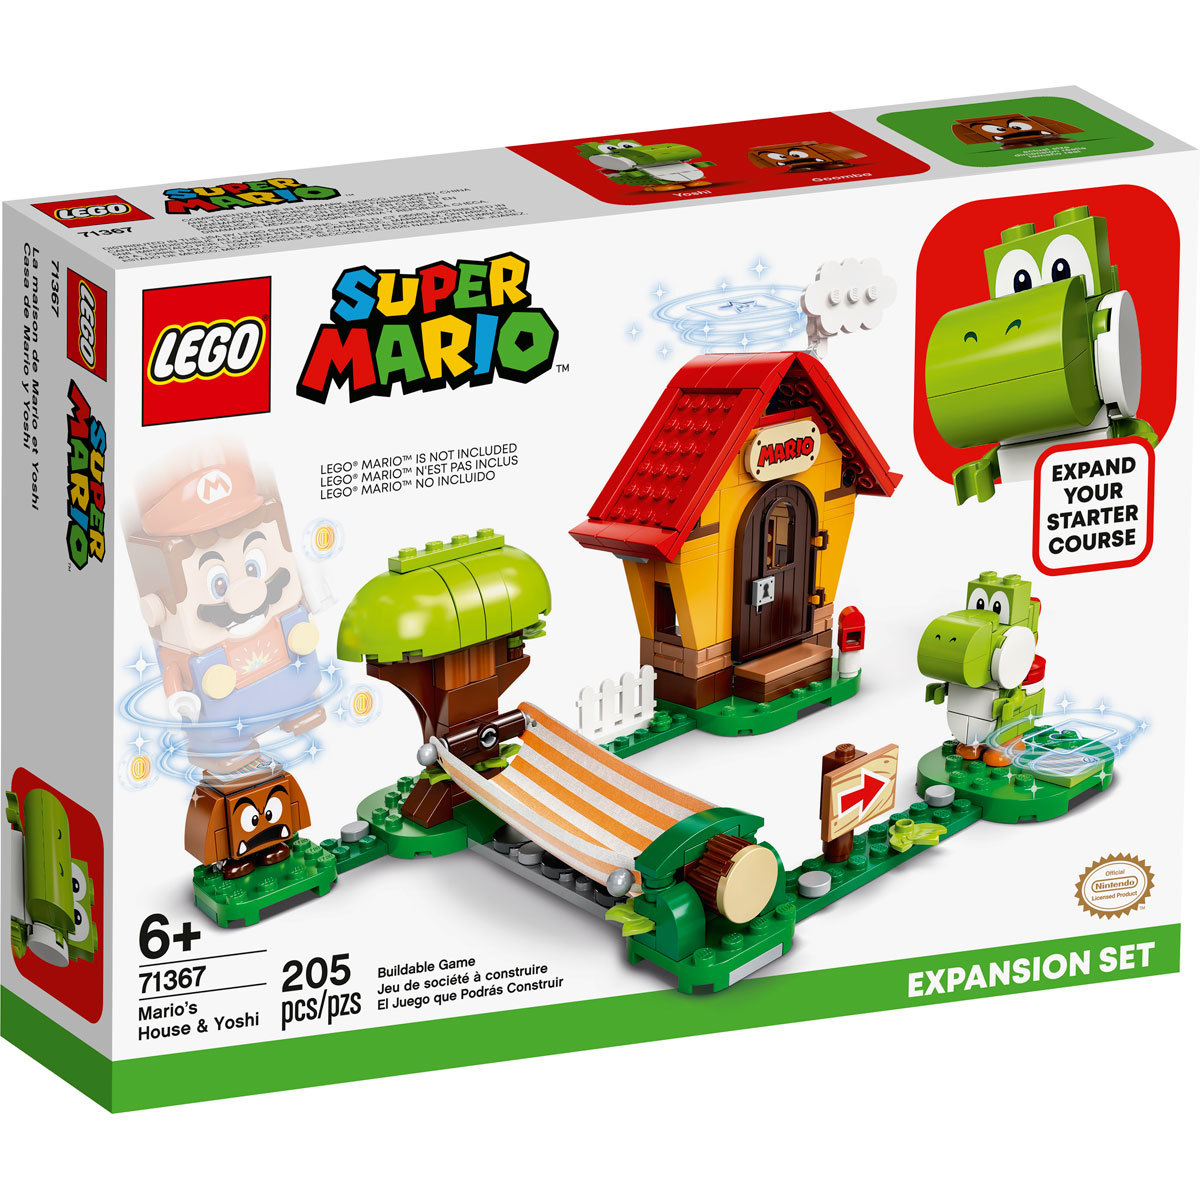  LEGO Super Mario Mario's House and Yoshi Expansion Set - 71367